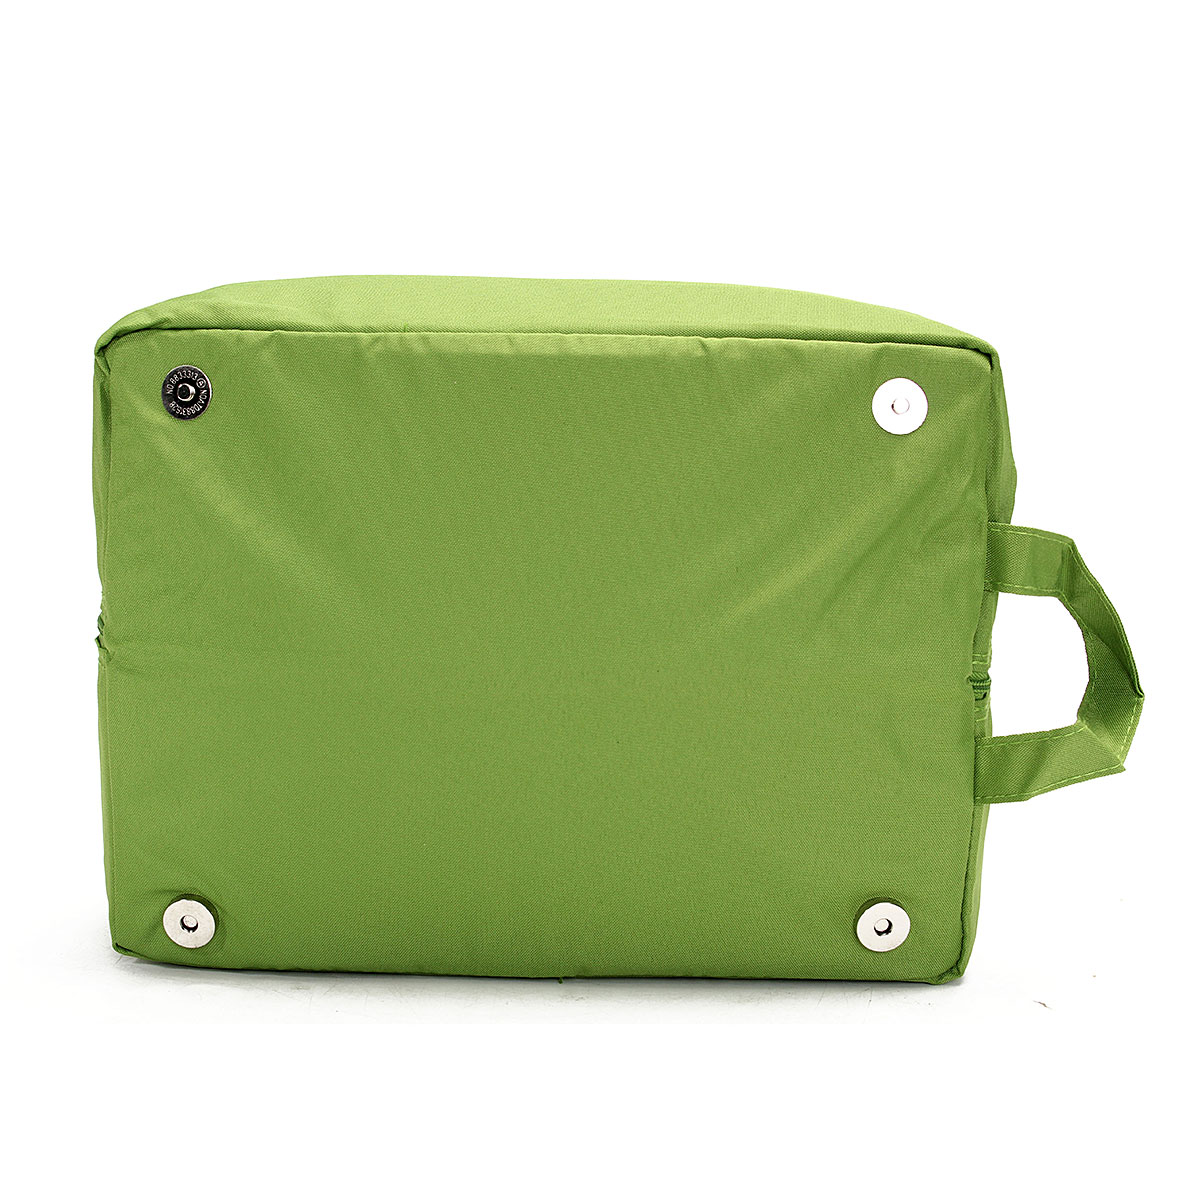 Portable-Nylon-Travel-Storage-Bag-Pouch-Bag-Case-Luggage-Cosmetic-Organizer-1460329-6